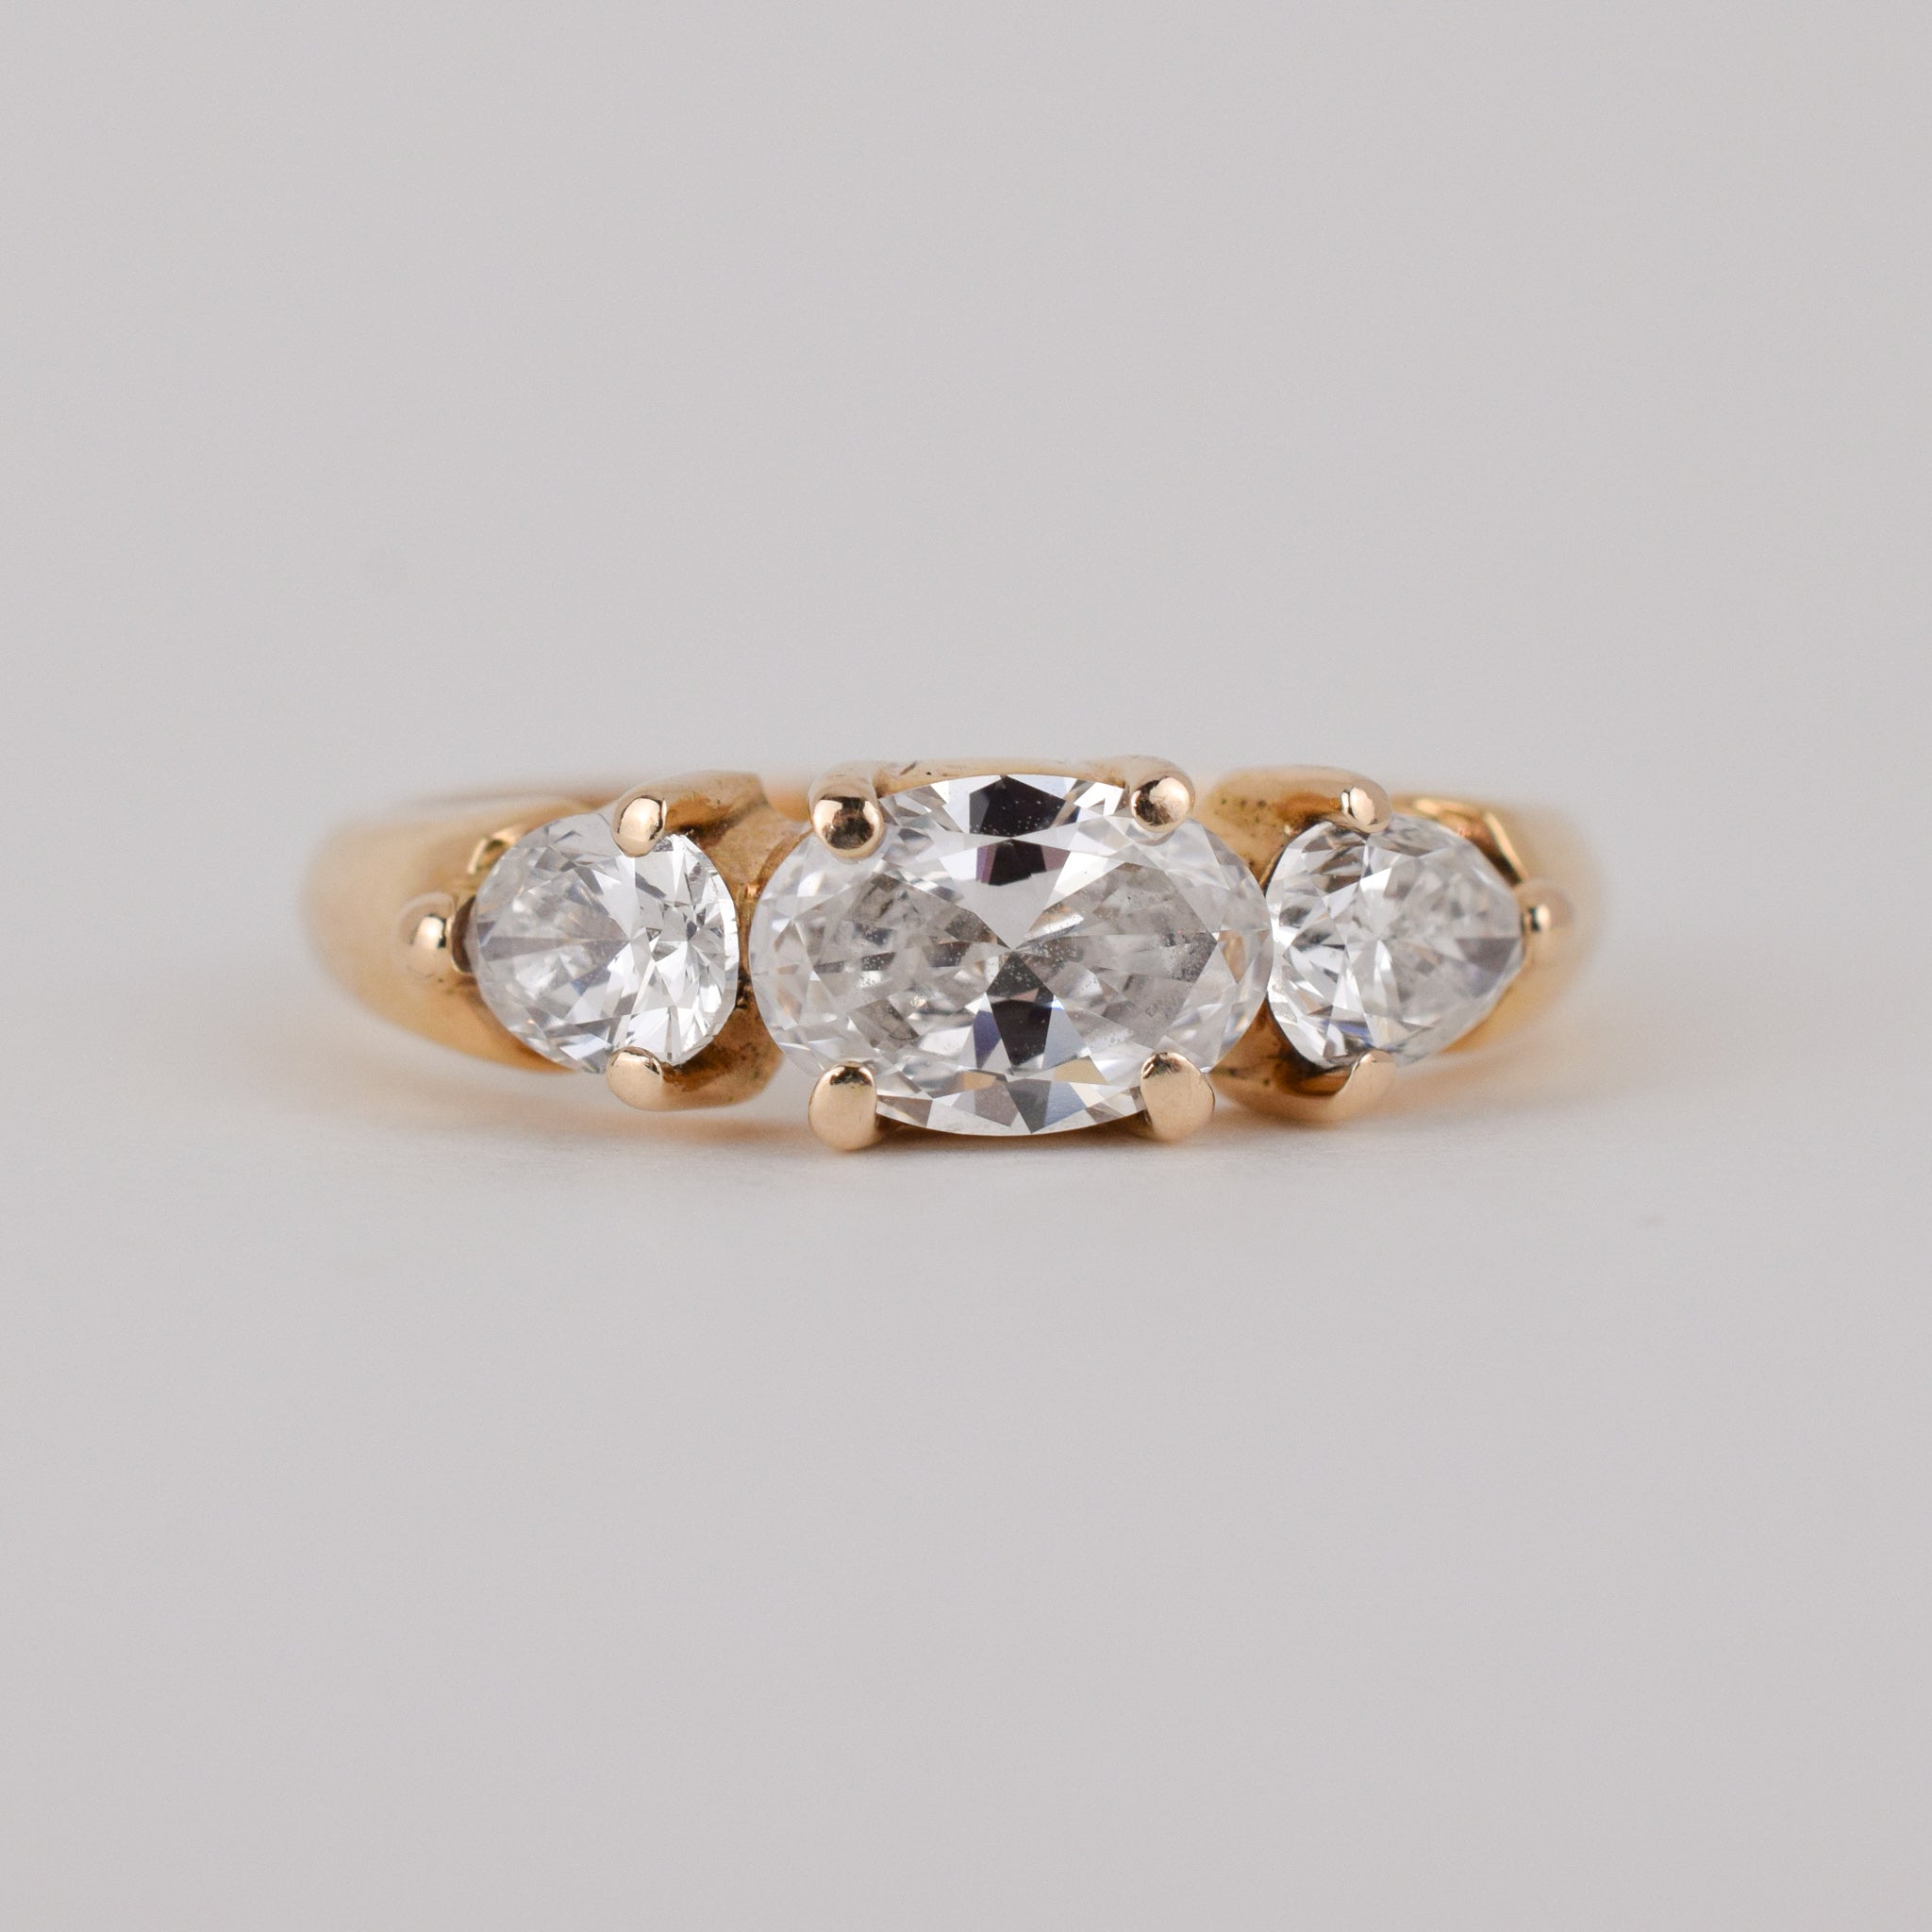 Spectacular oval diamond trilogy engagement ring, folklor